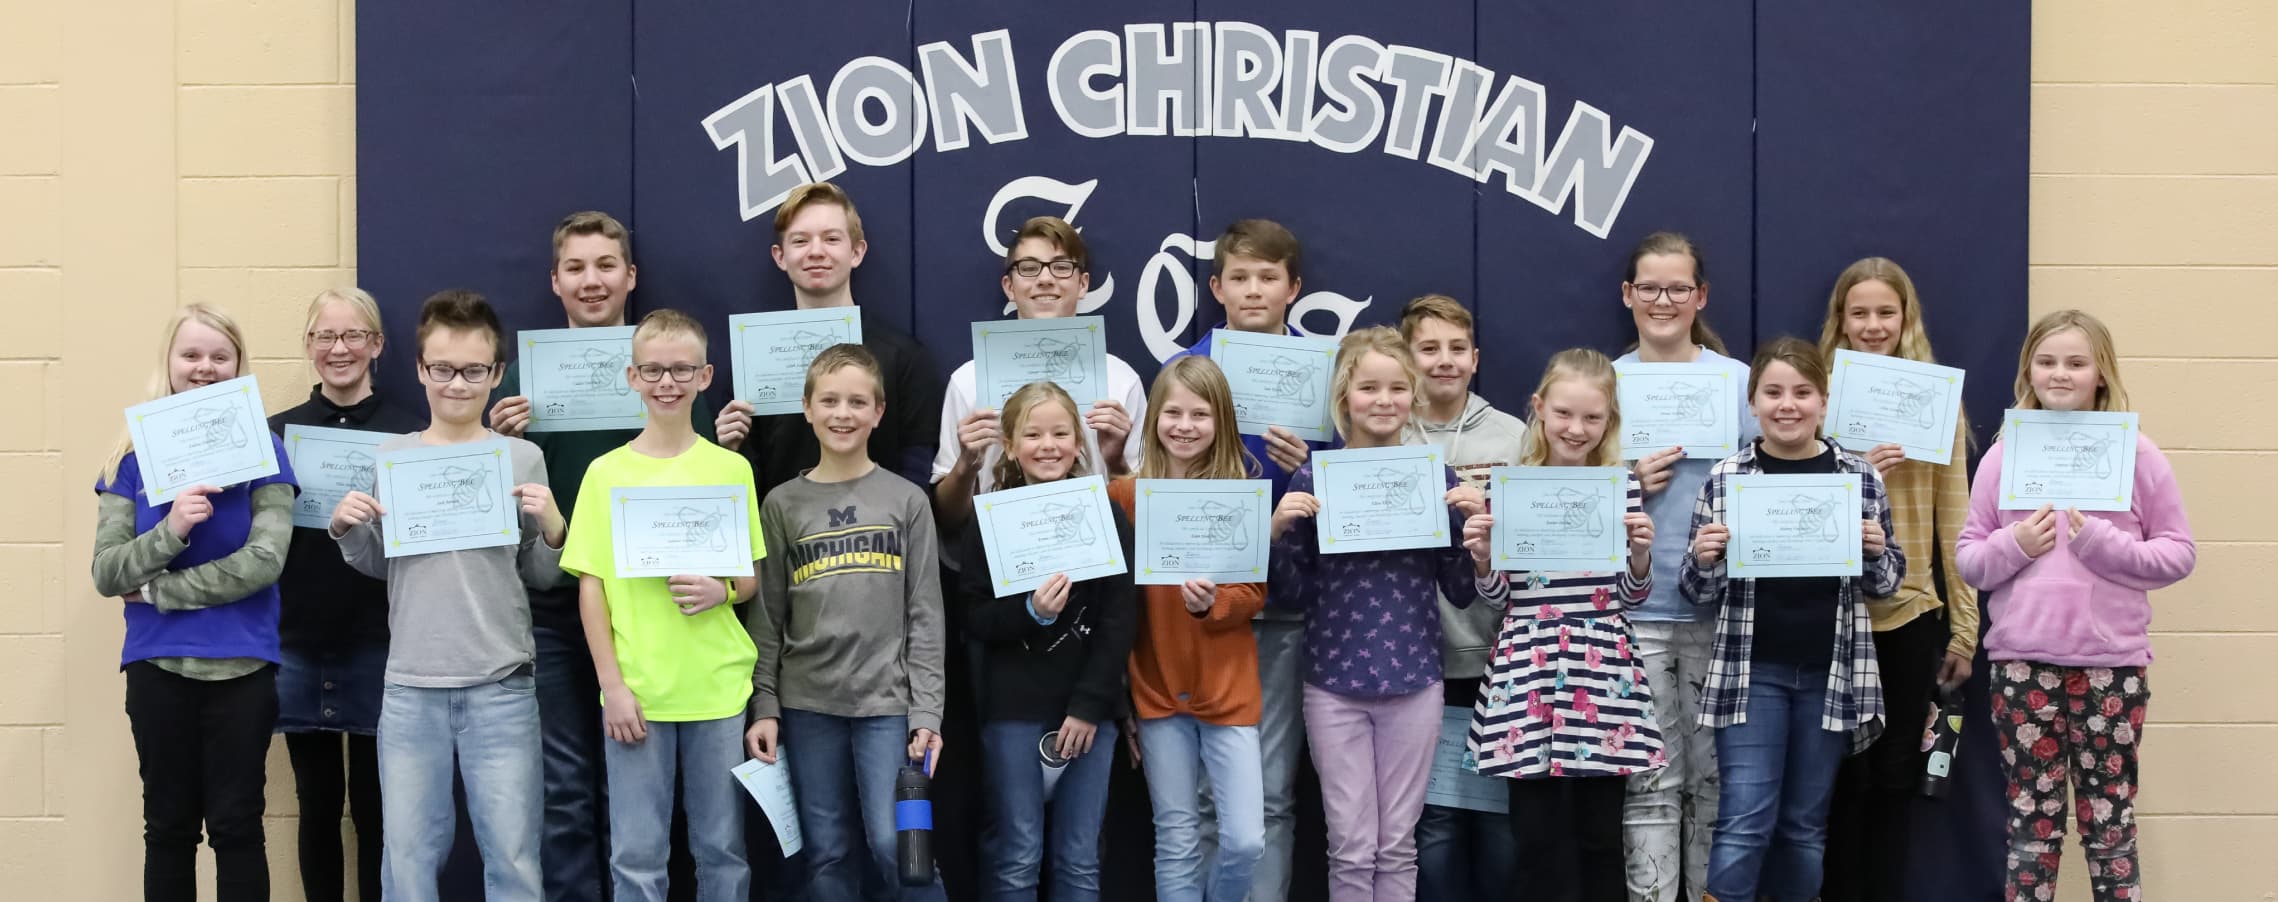 Zion Christian school